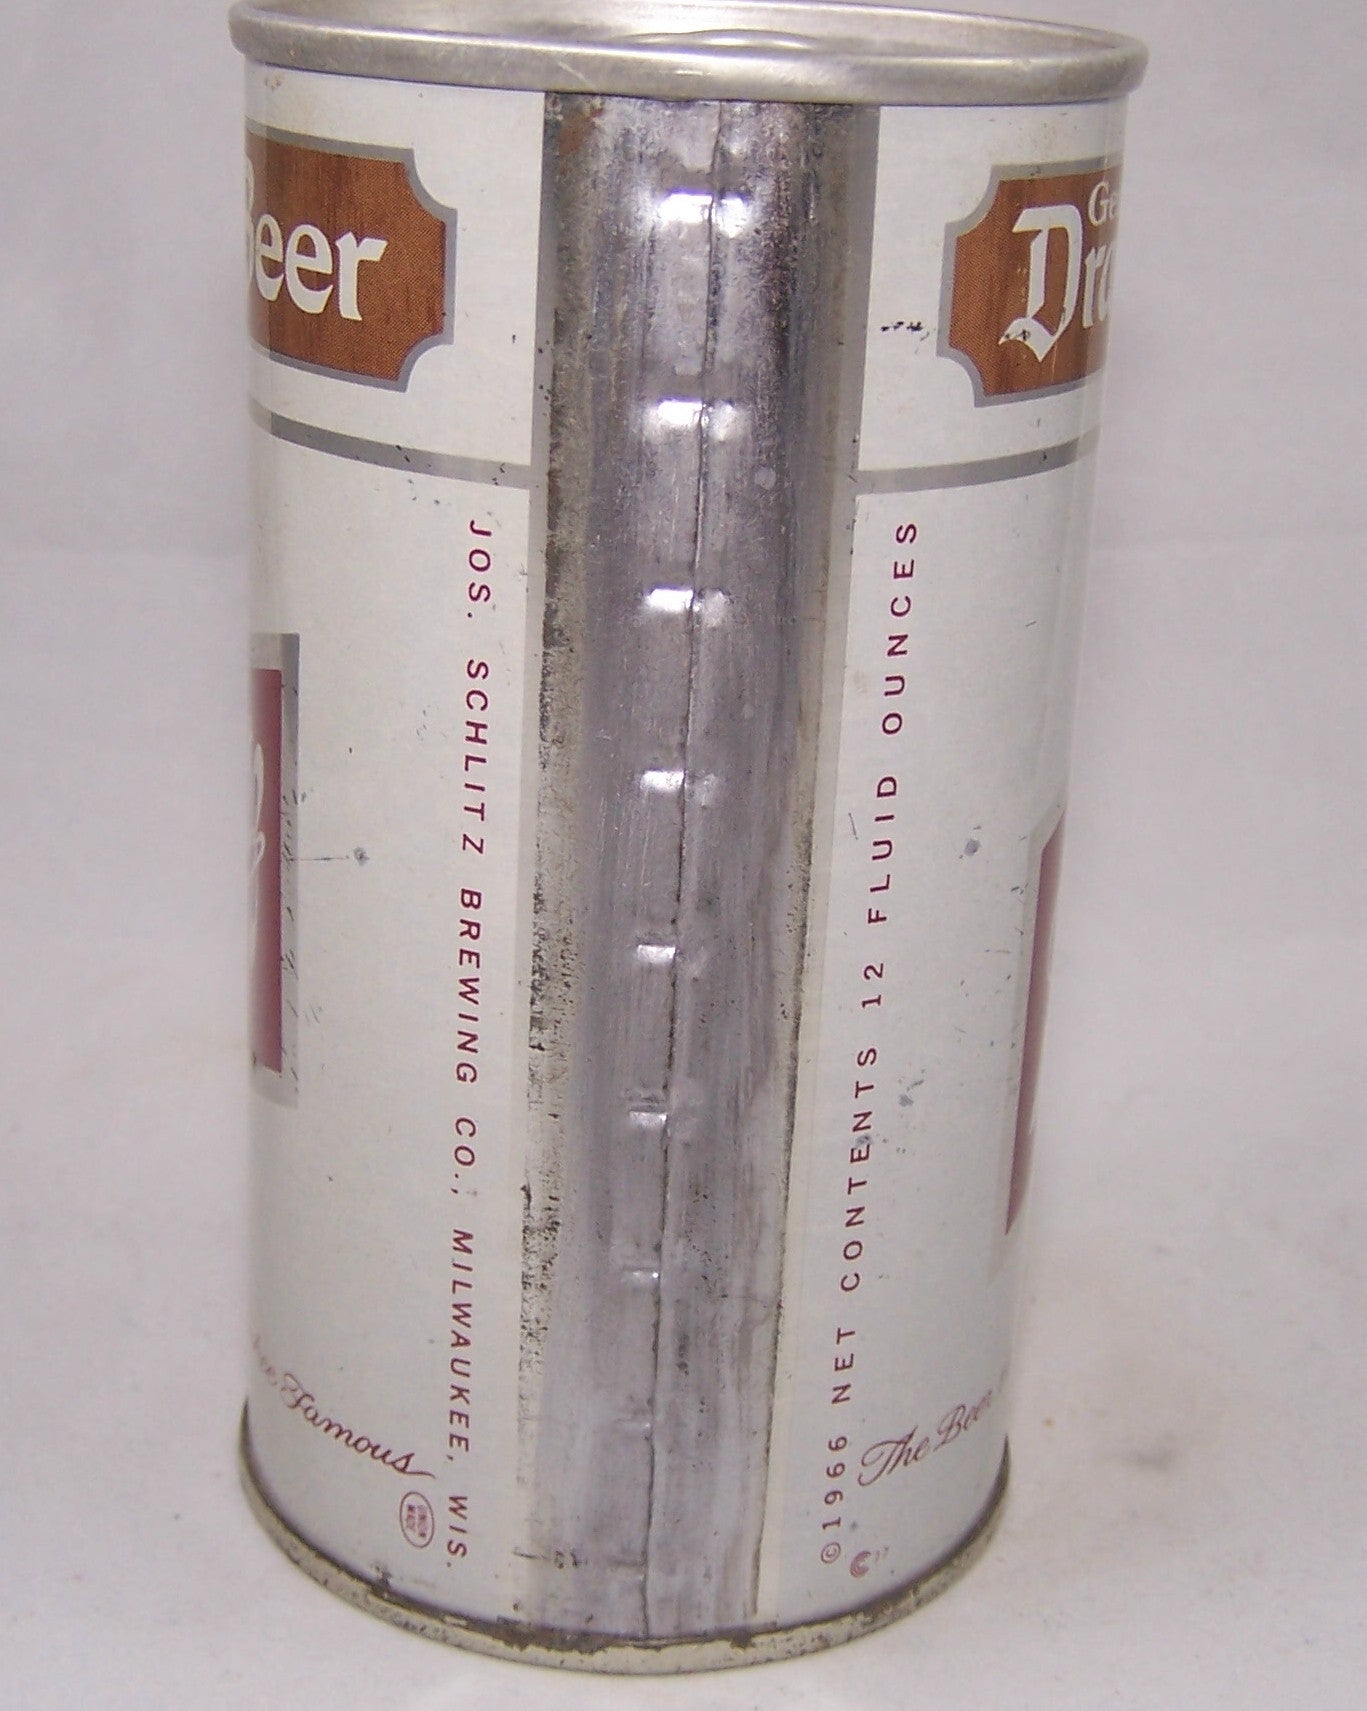 Schlitz Genuine Draught Beer, USBC II 121-04, Grade 1 or better. Sold on 07/22/16